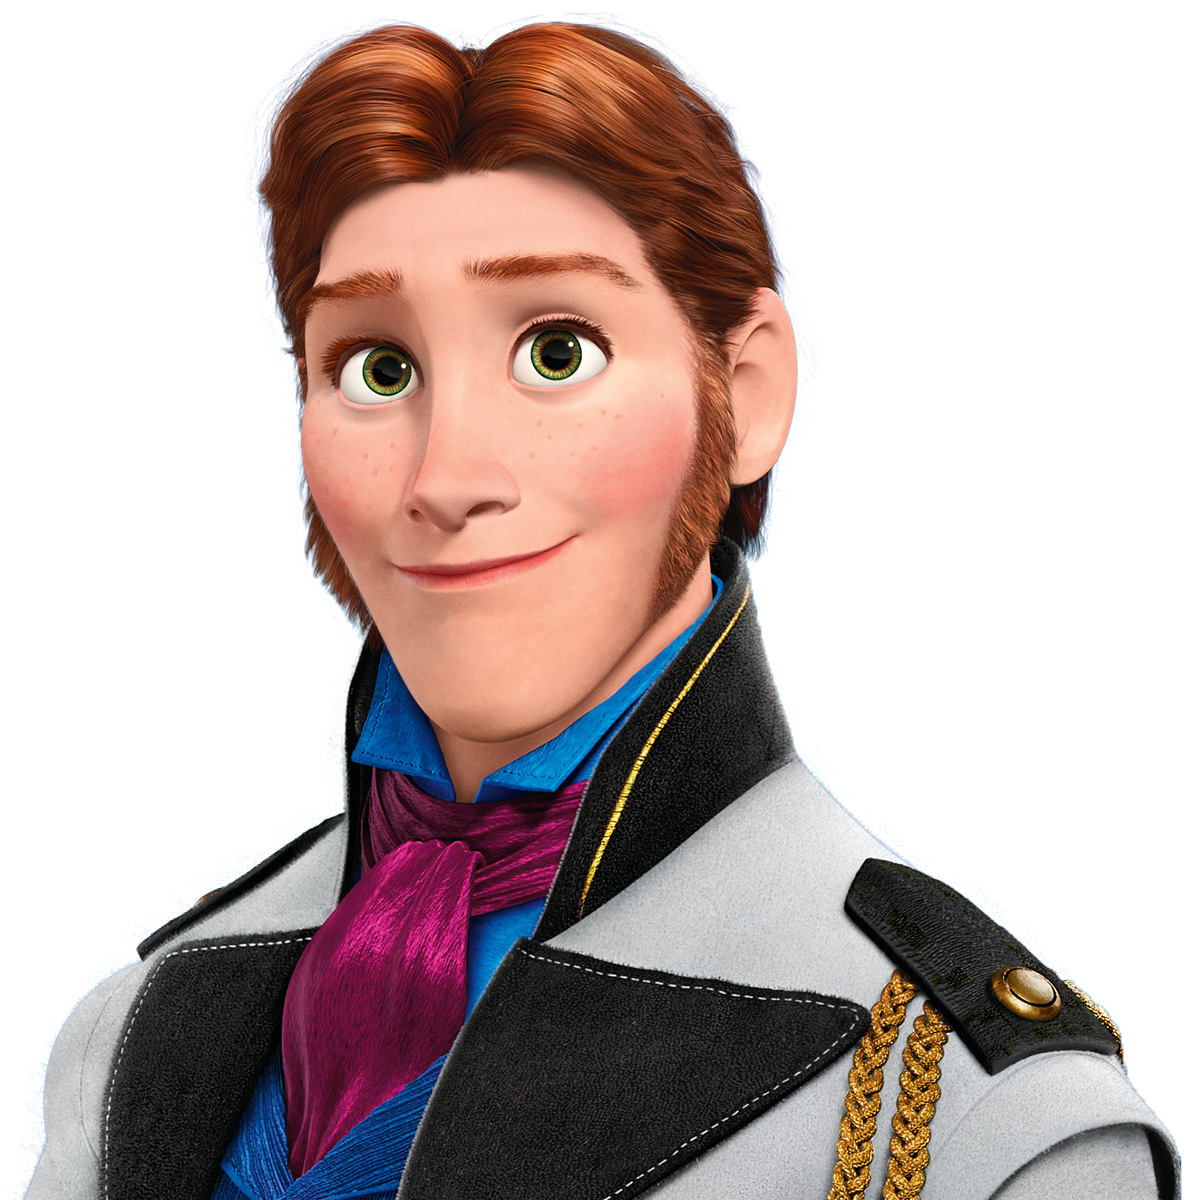 Hans from frozen